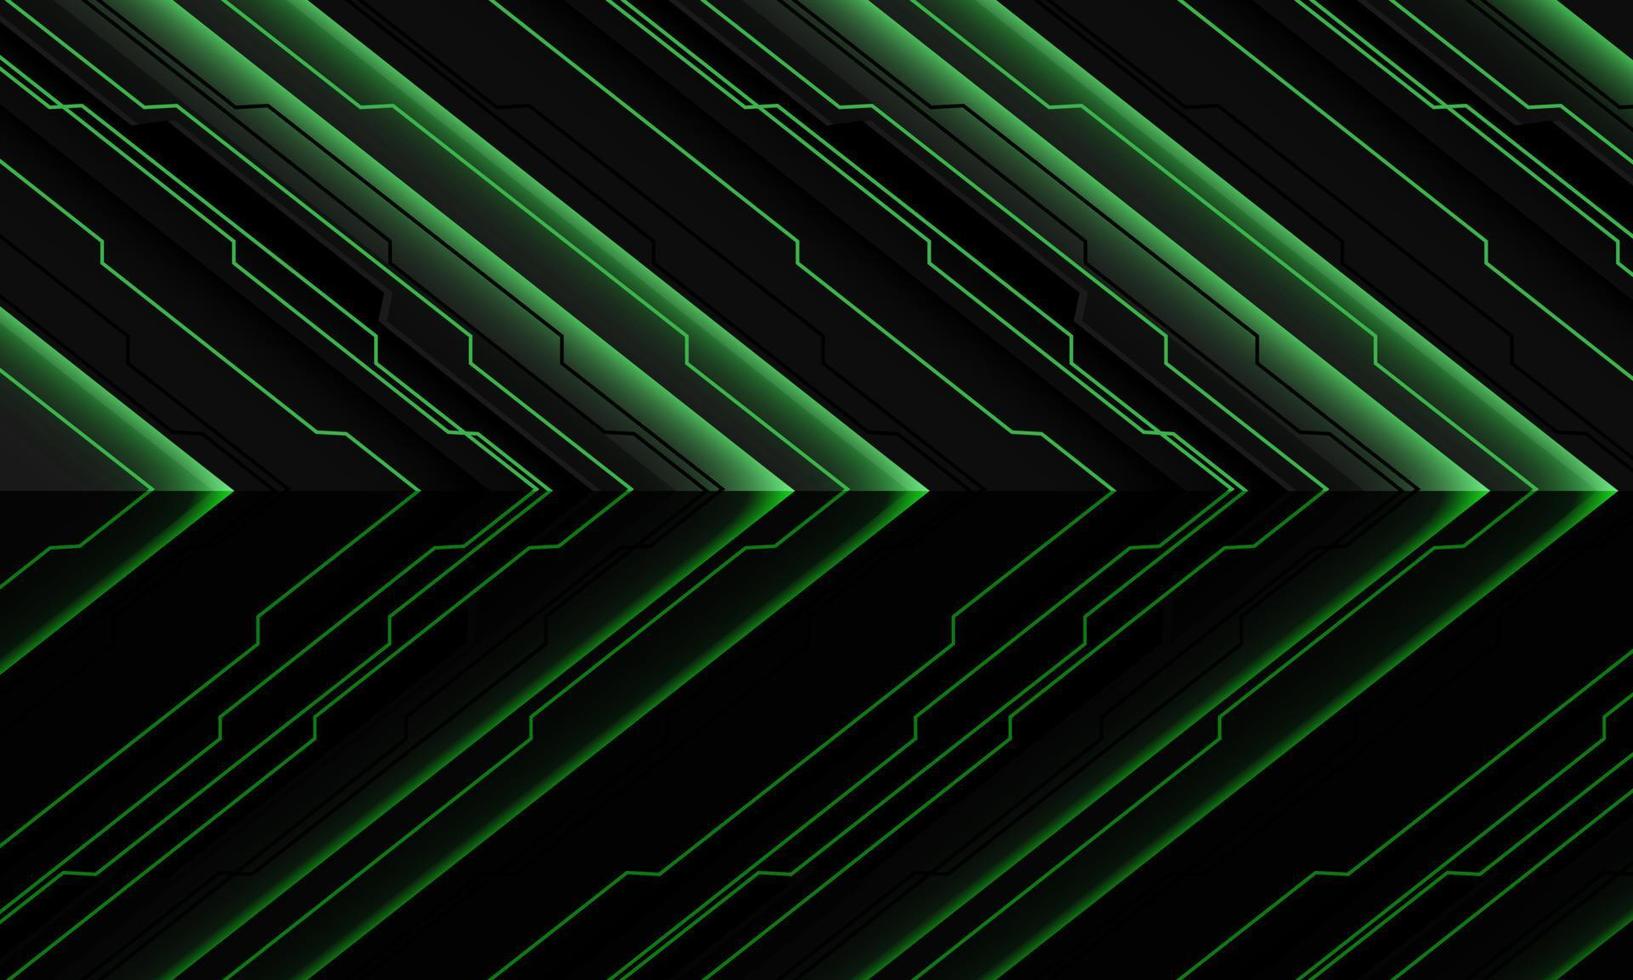 abstrakt grön grå metallisk krets ljus cyber pil riktning geometrisk mönster design modern teknologi trogen bakgrund vektor